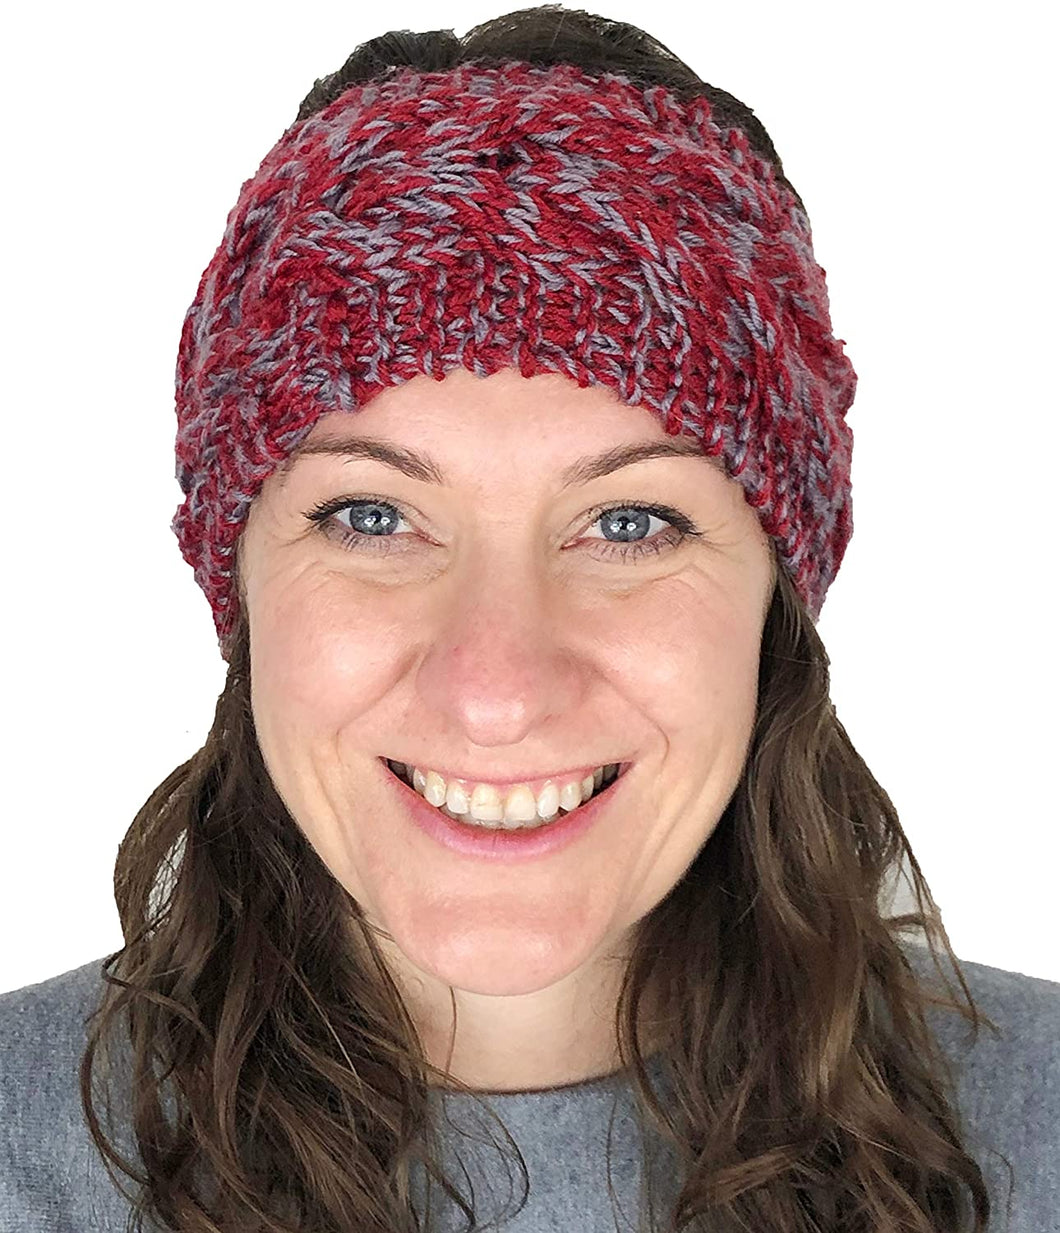 Red/grey mixed coloured woollen machine knitted headband. Warm winter headband